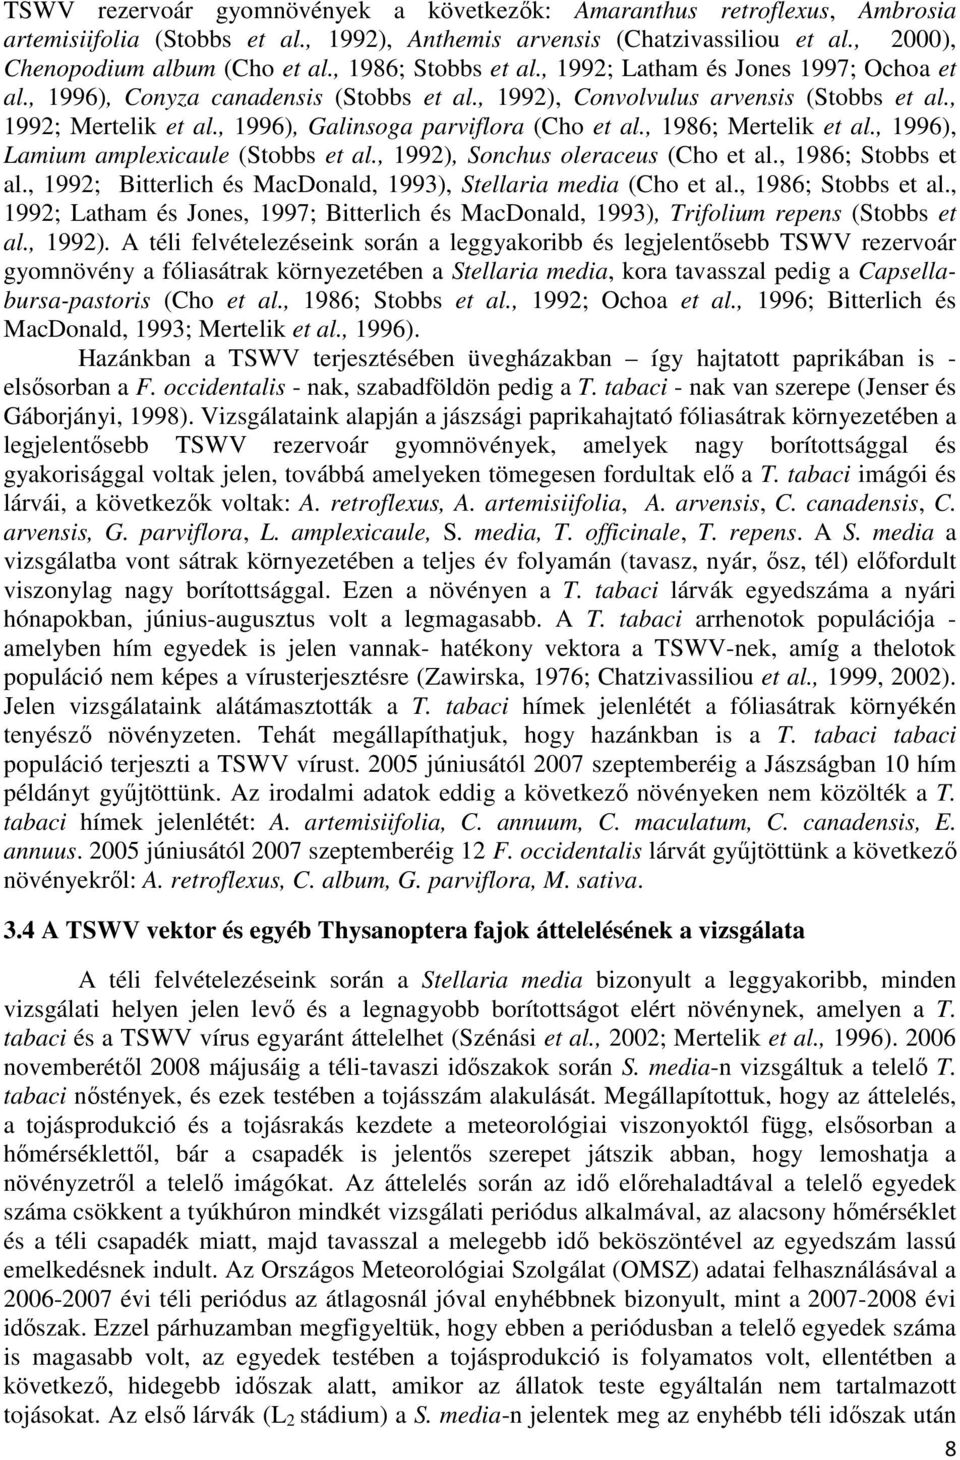 , 1996), Galinsoga parviflora (Cho et al., 1986; Mertelik et al., 1996), Lamium amplexicaule (Stobbs et al., 1992), Sonchus oleraceus (Cho et al., 1986; Stobbs et al.